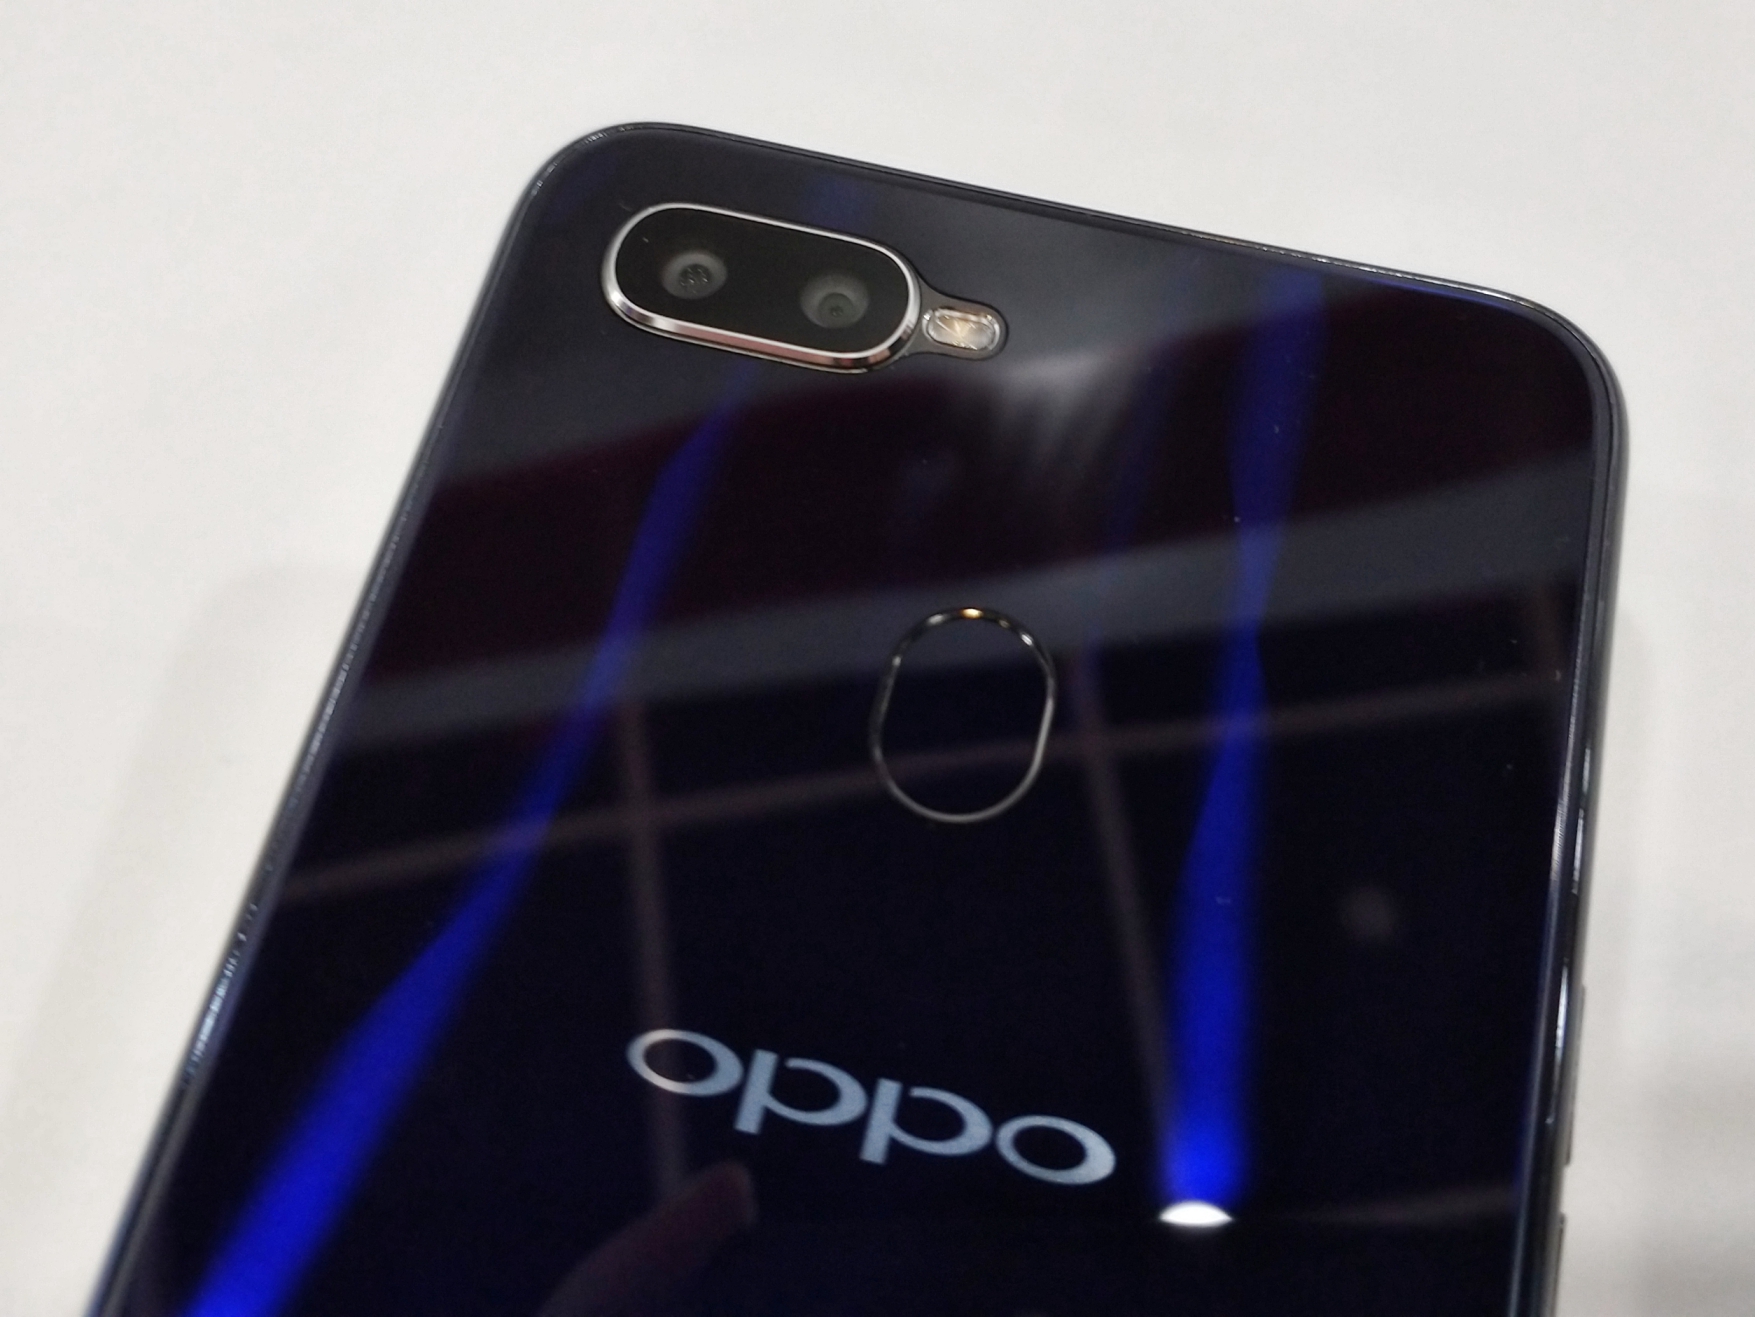 قارن بين آخر إصدارين من فئة Oppo F هاتف Oppo F7 وهاتف Oppo F9